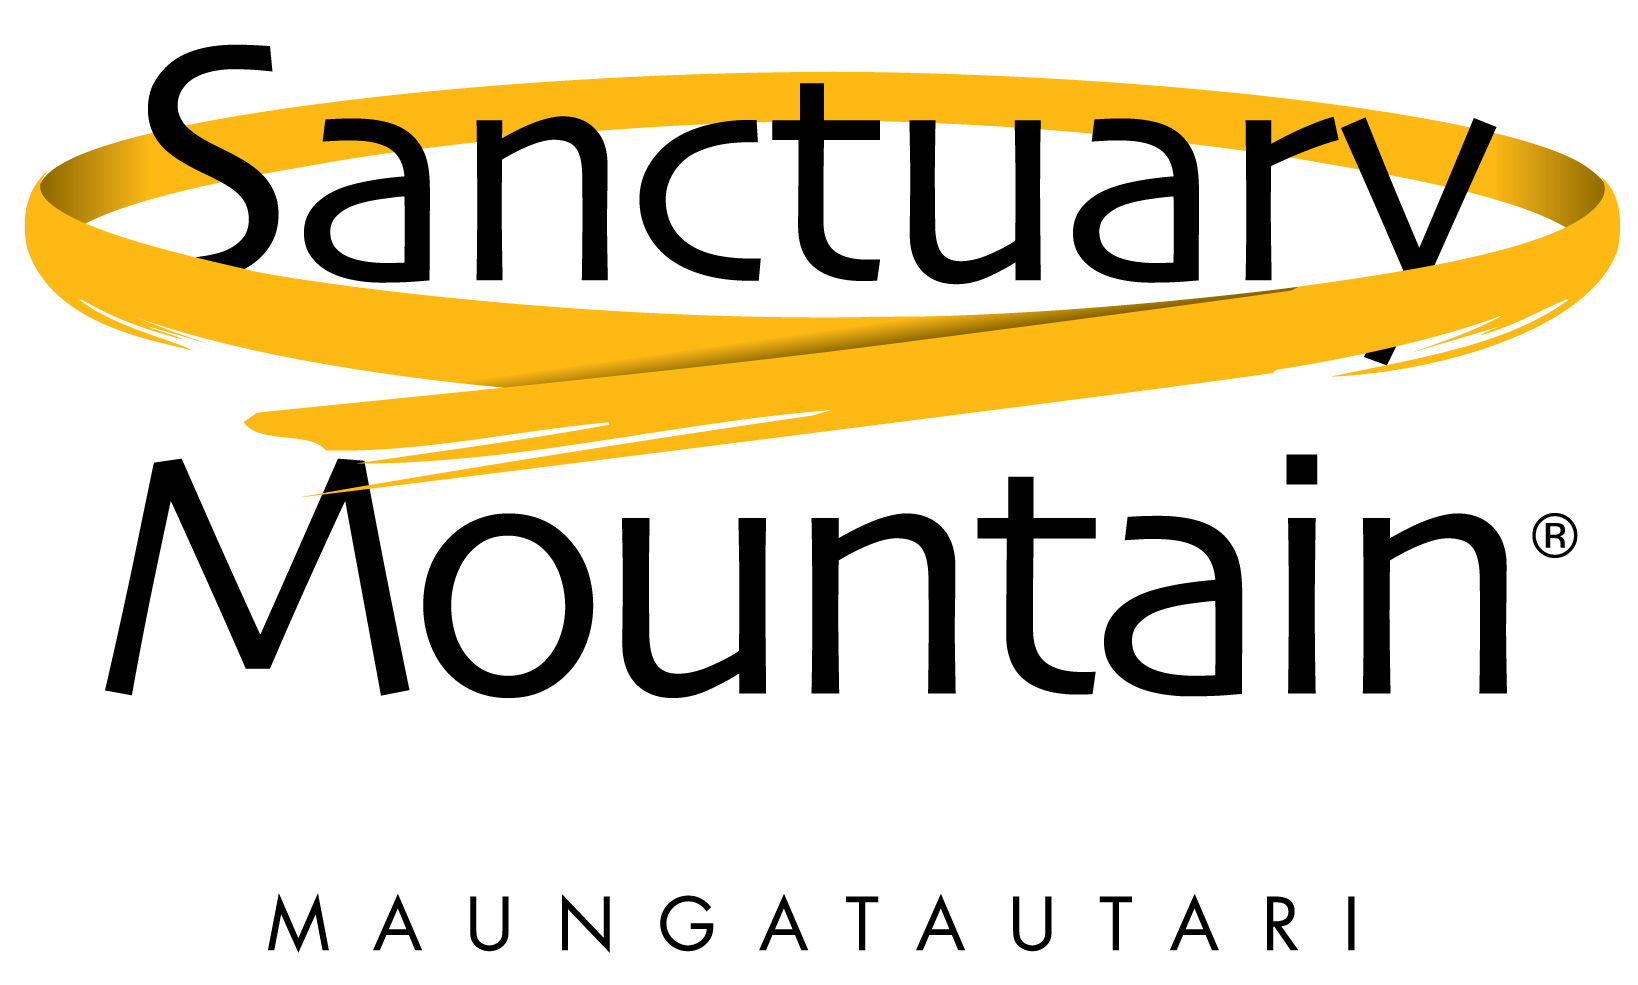 Sanctuary Mountain Maungatautari logo